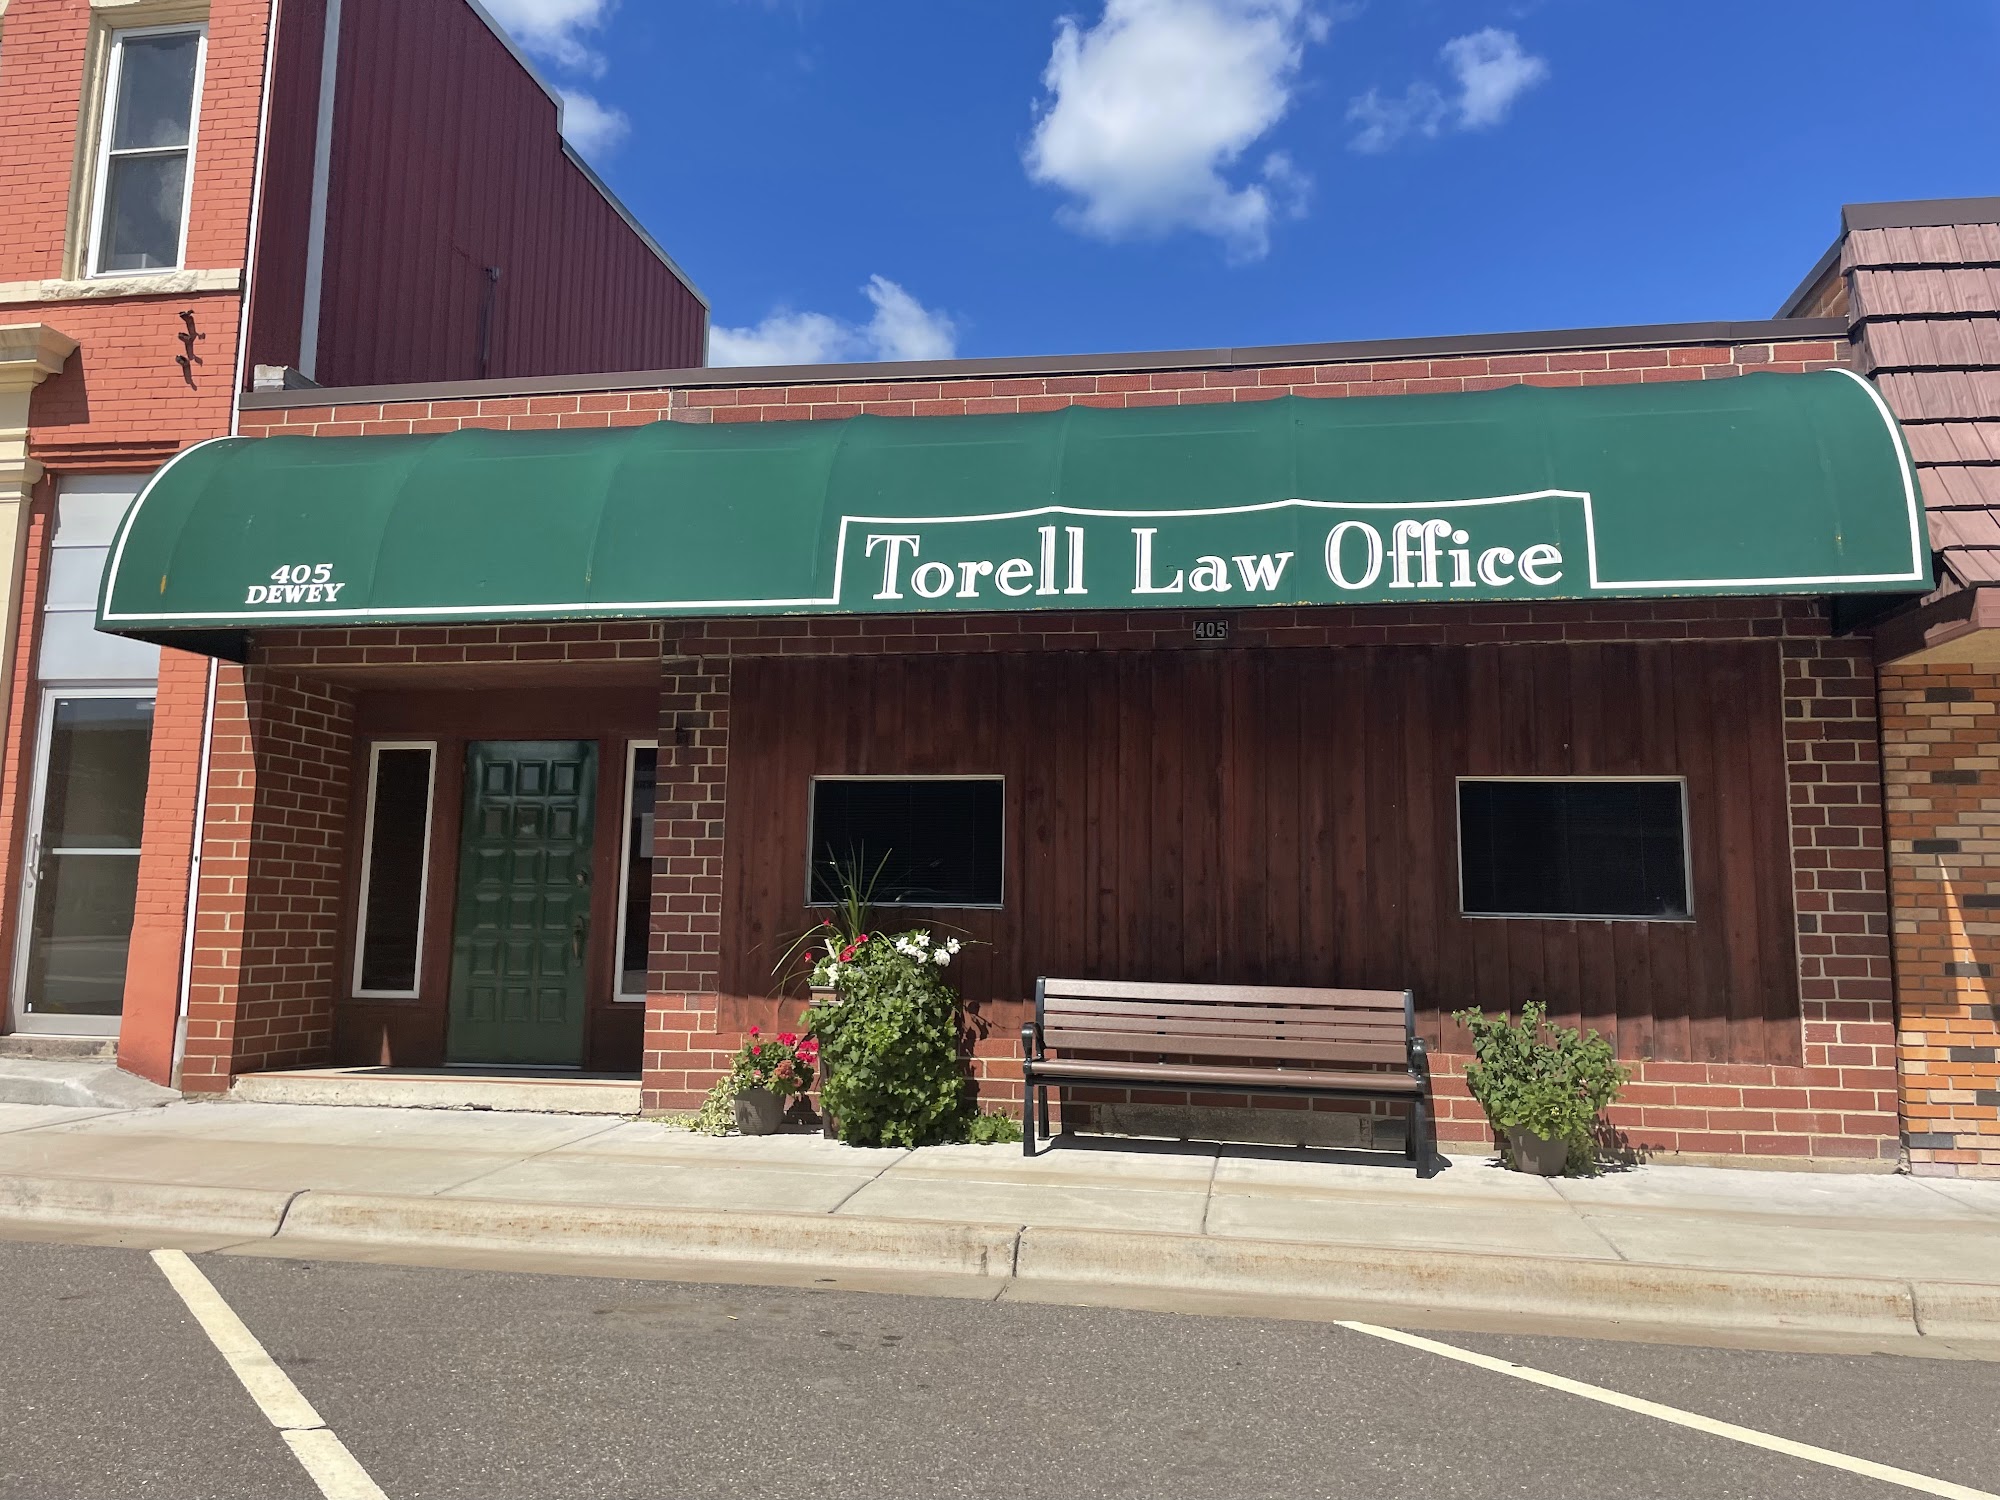 Torell Law Office 405 Dewey St, Foley Minnesota 56329